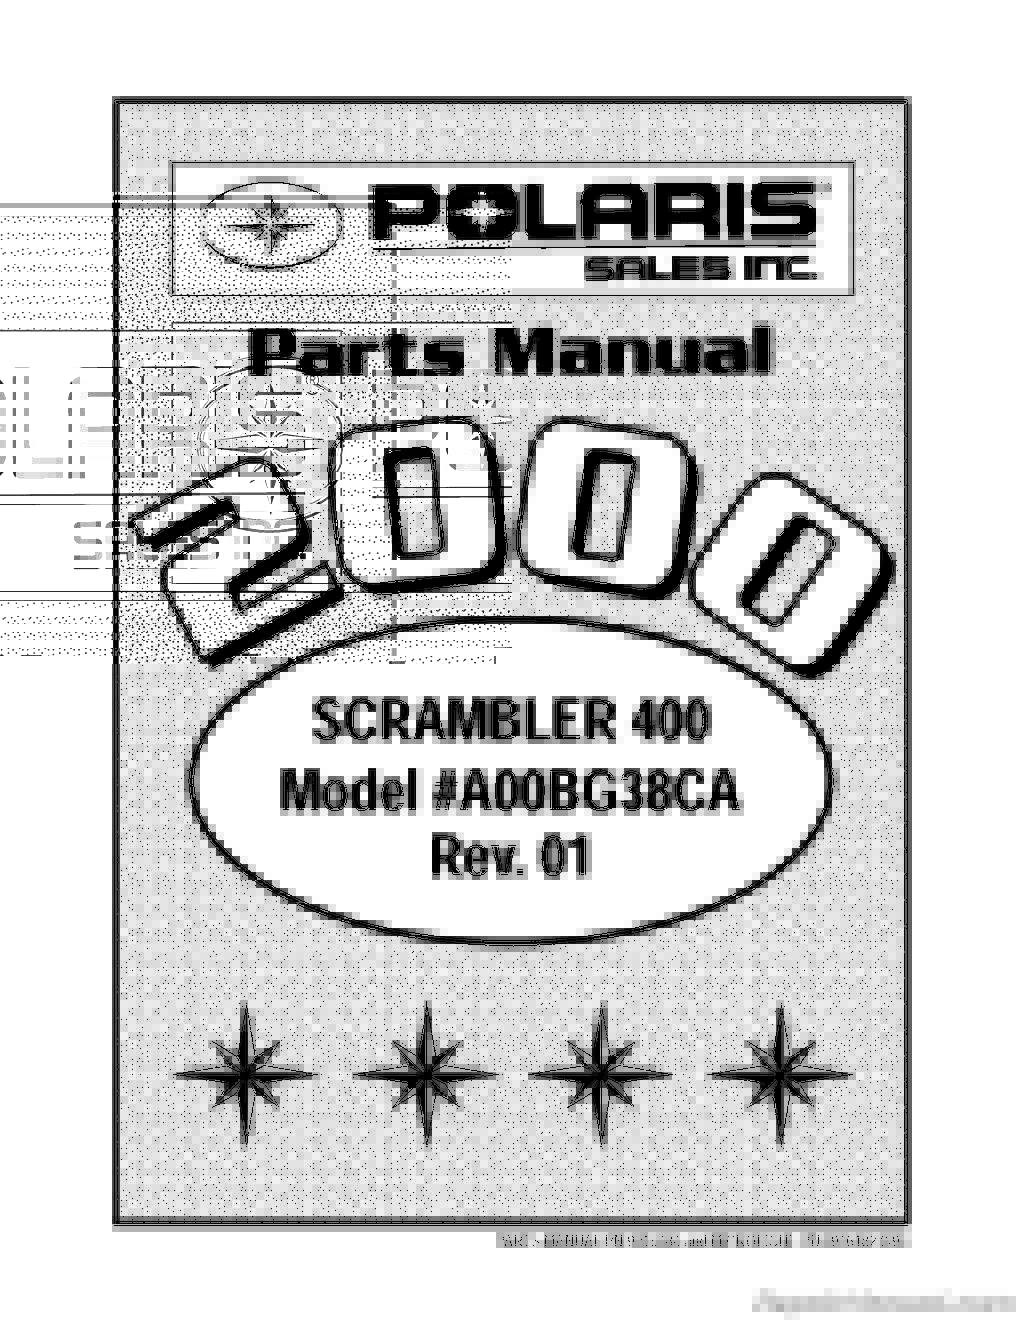 Clutch Rebuild Kit w/ Weights for Polaris Scrambler 400 2x4 4x4 1998-2002 